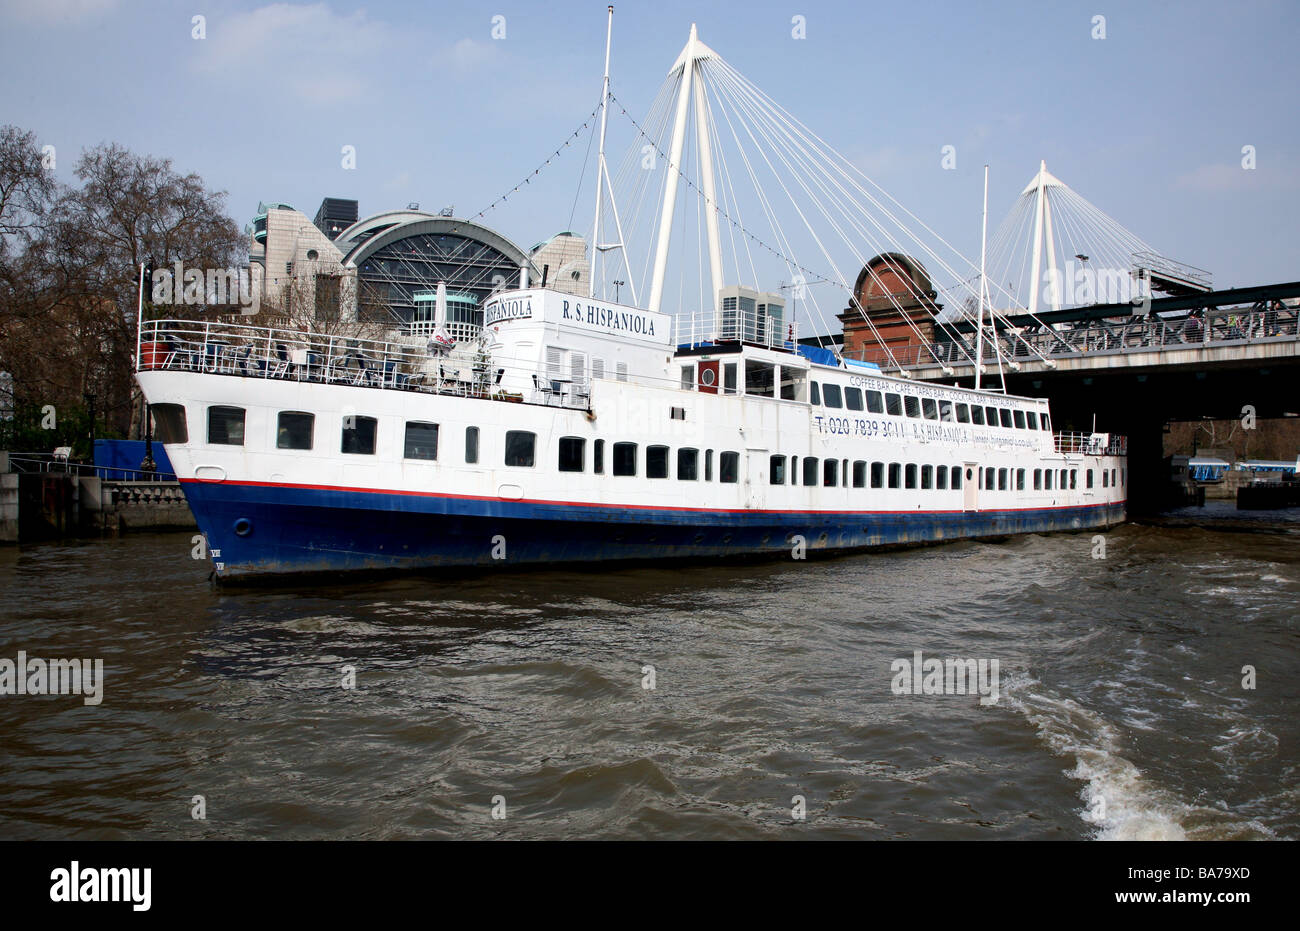 R S Hispaniola Bar & Restaurant Schiff am Fluß Themse, London Stockfoto